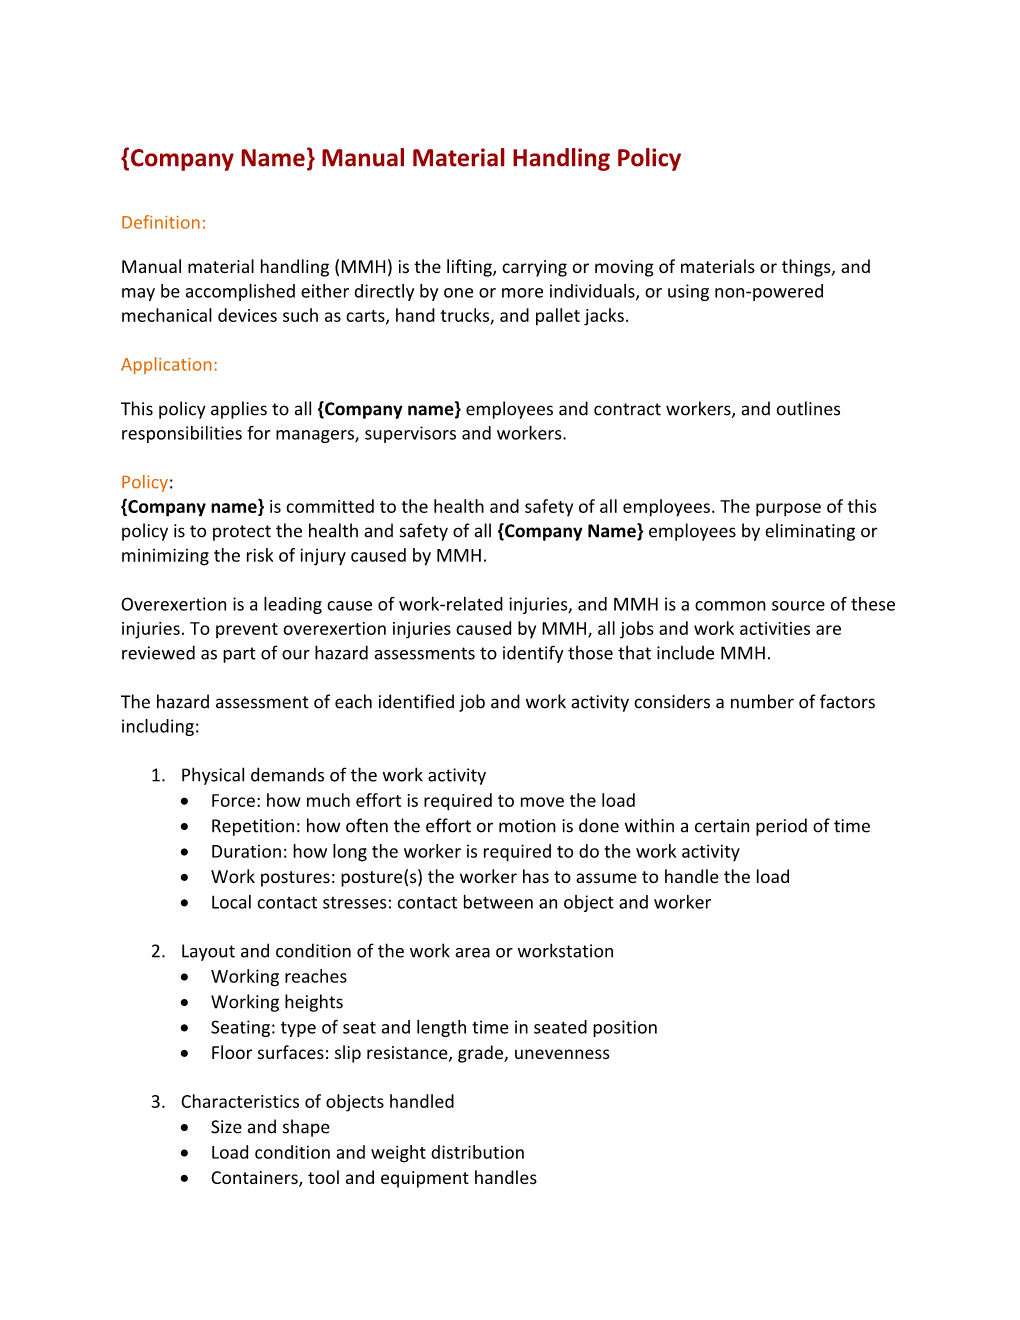 Company Name Manual Material Handling Policy